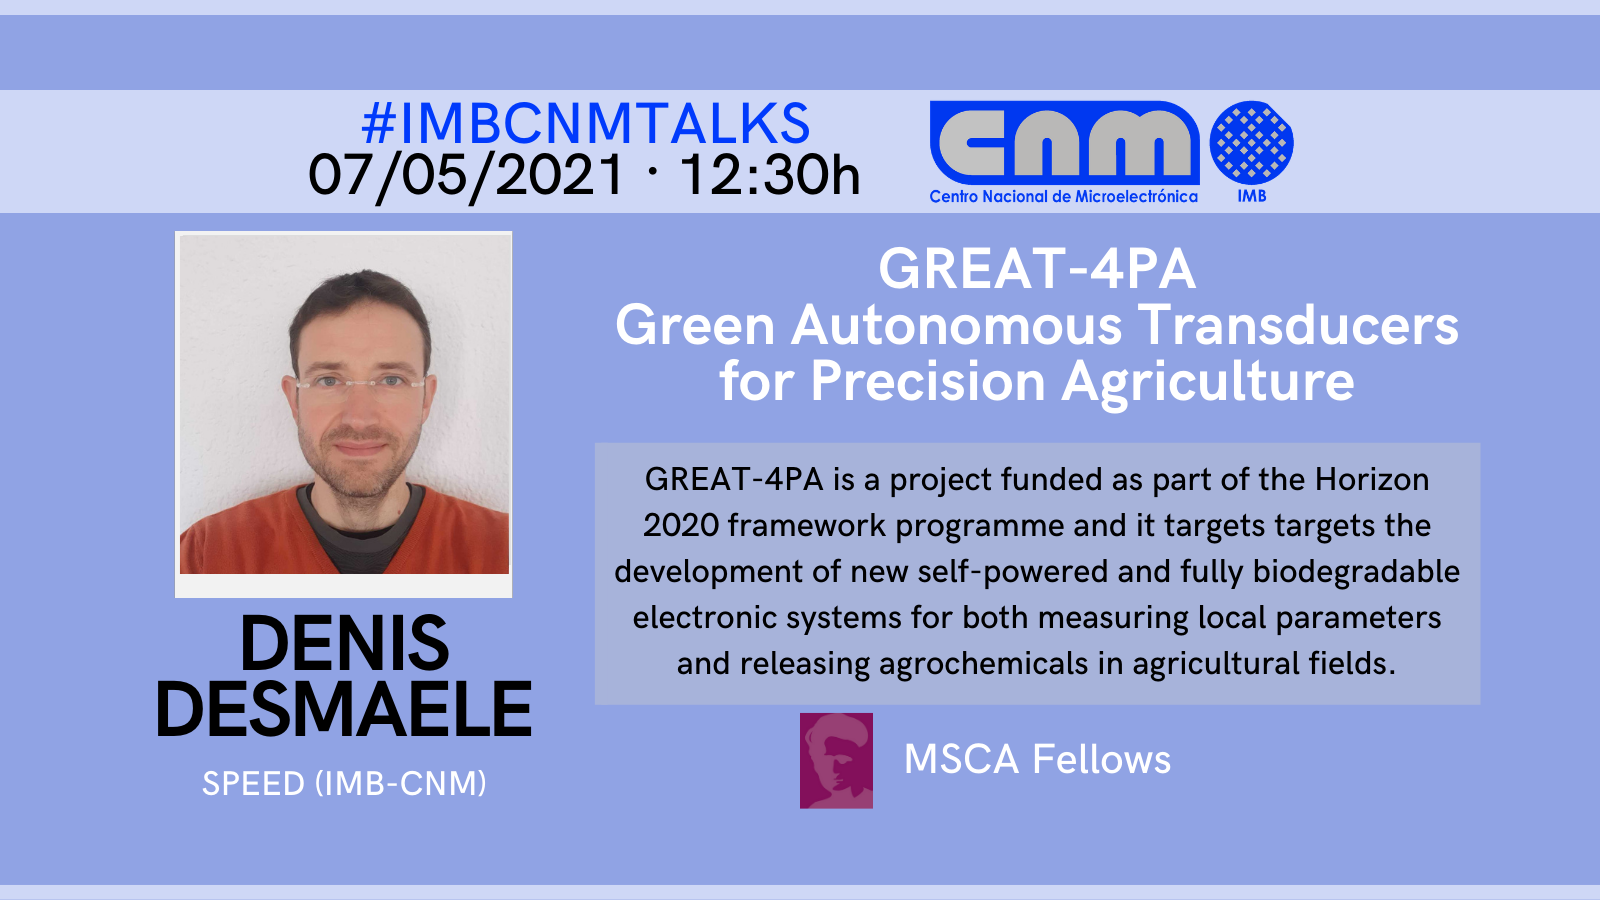 IMB-CNM Talks by Denis Desmaele on May 7th.